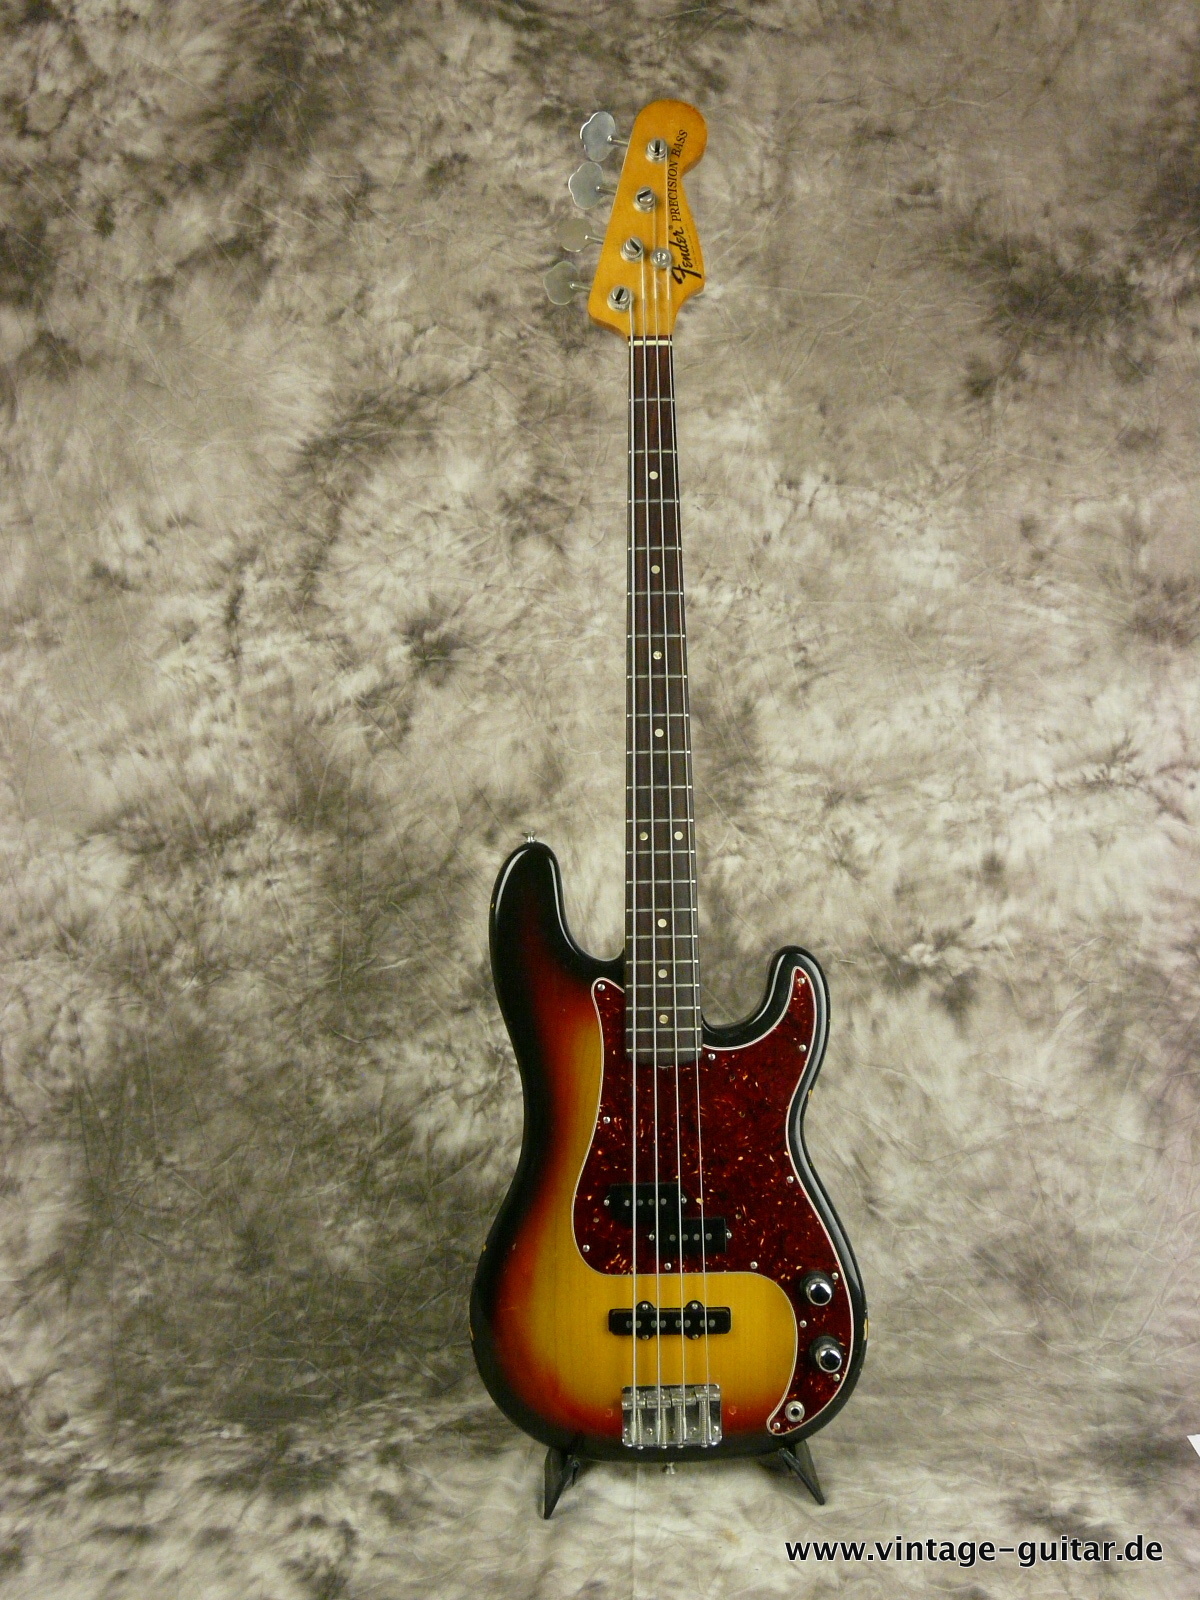 Fender-Precision_Bass-1973-sunburst-J-Bass-Pickup-001.JPG